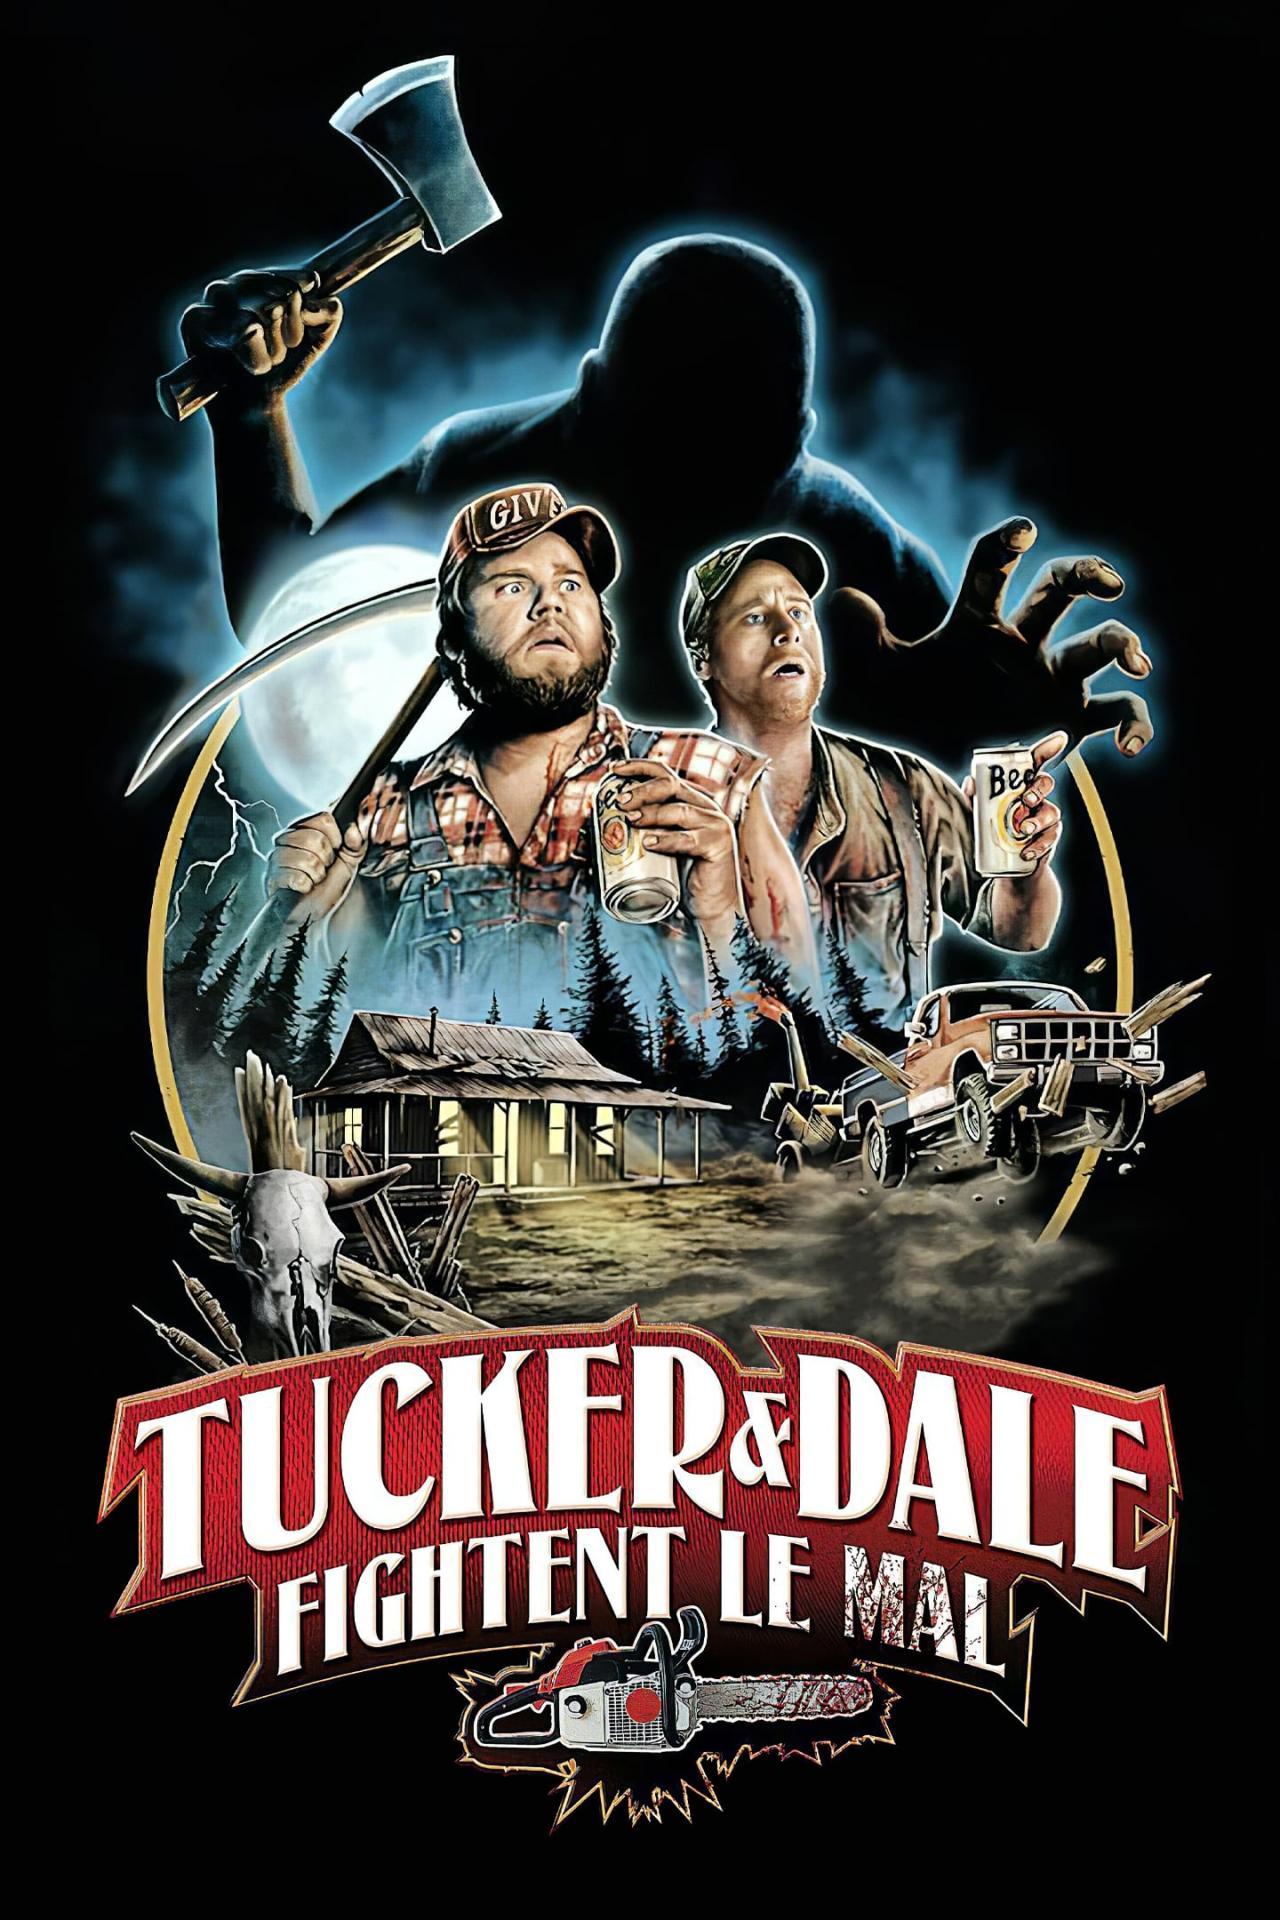 Affiche du film Tucker & Dale fightent le mal poster